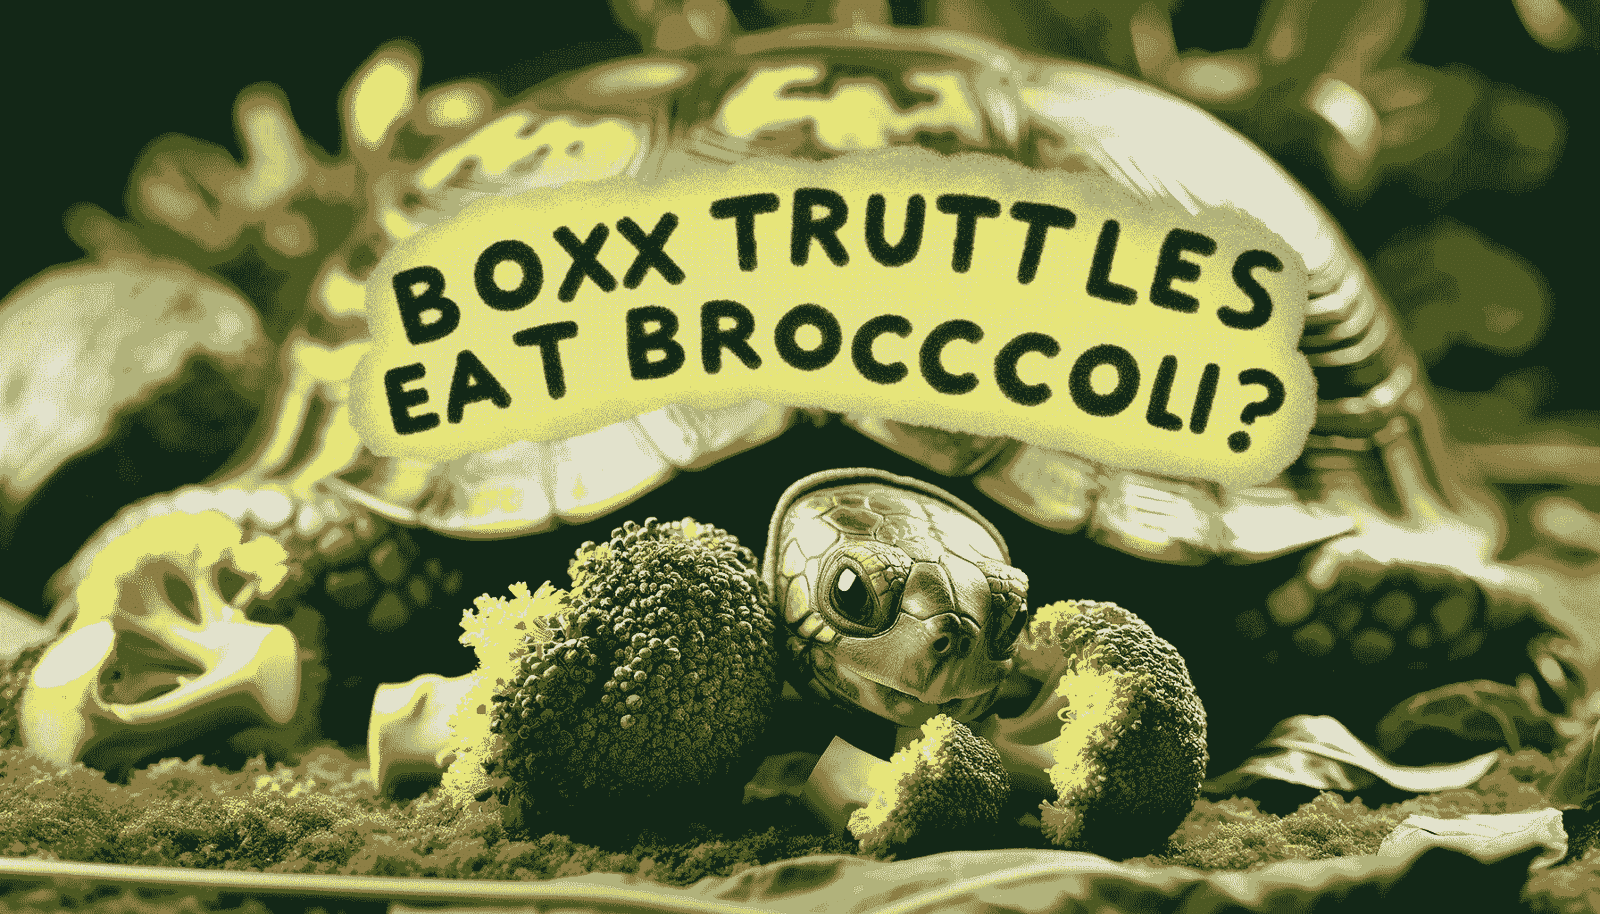 Can Box Turtles Eat Broccoli